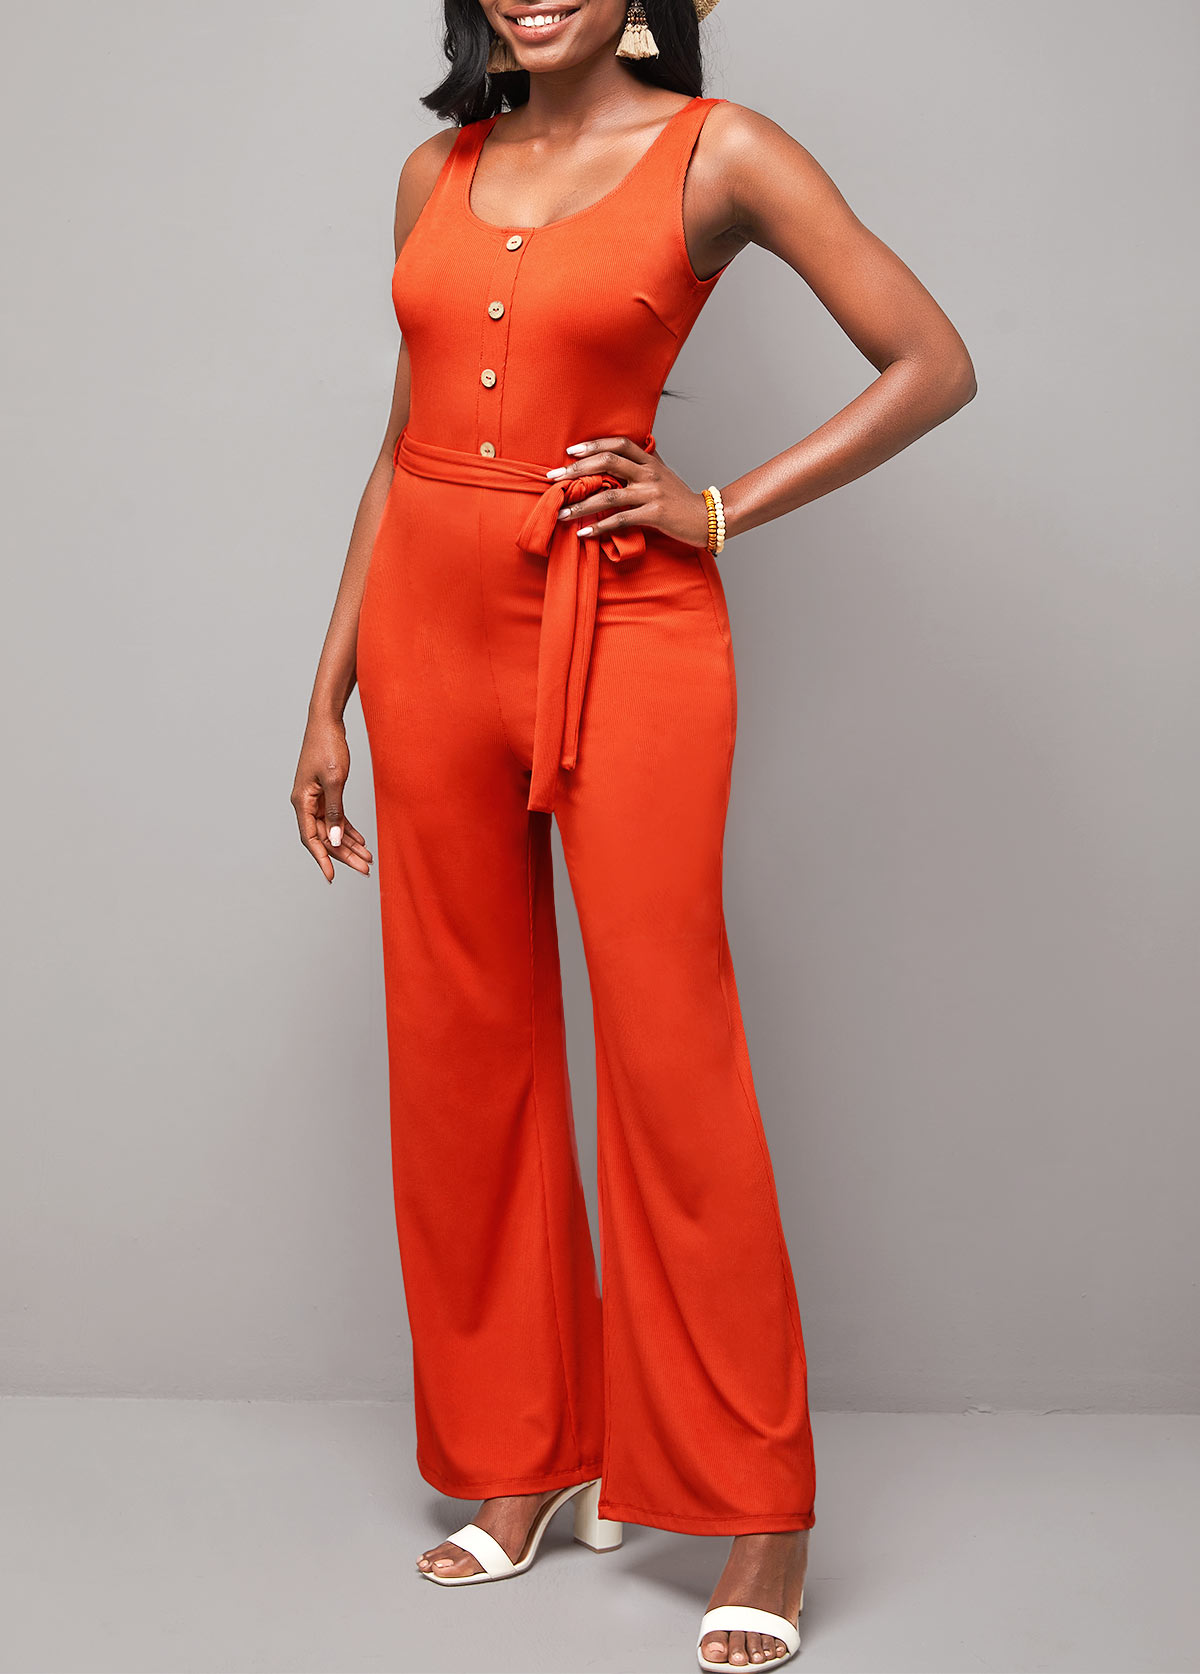 Decorative Button Orange Belted Sleeveless Jumpsuit